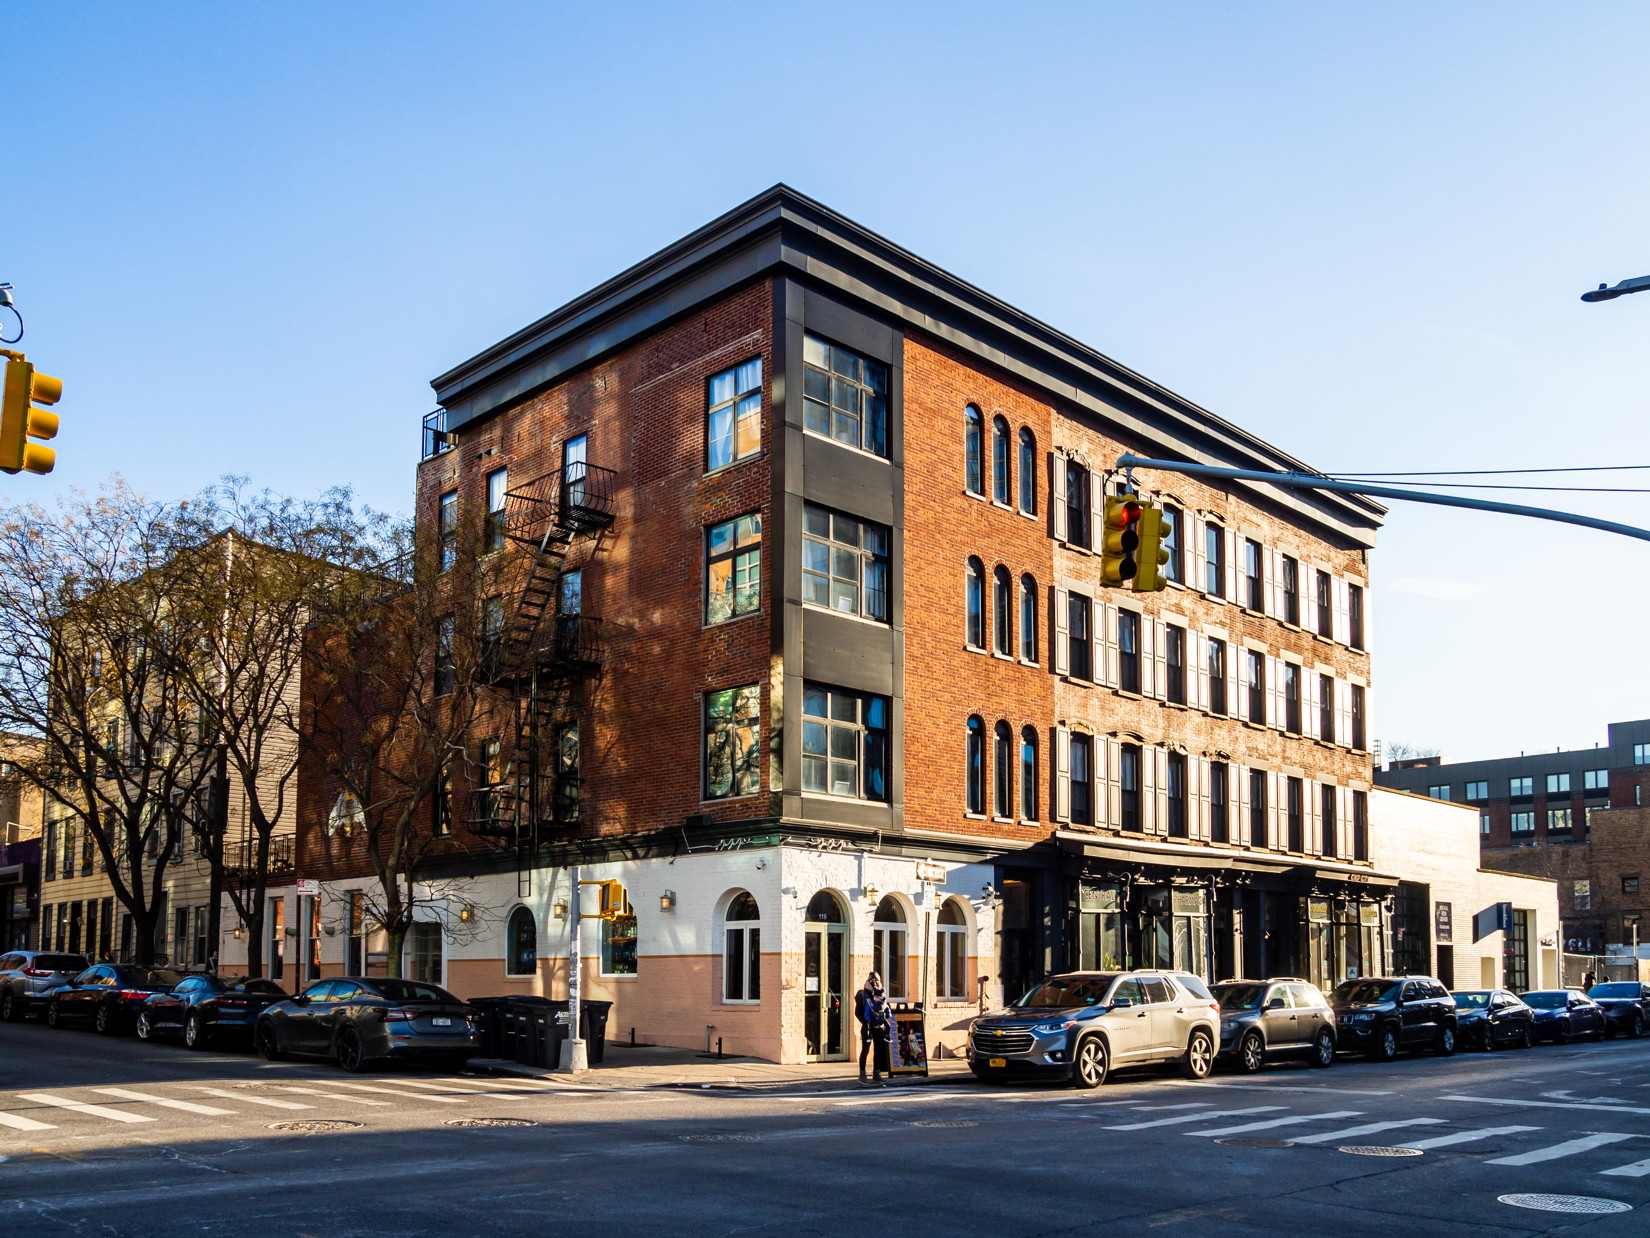 Brooklyn Street, Restaurant, and Buildings